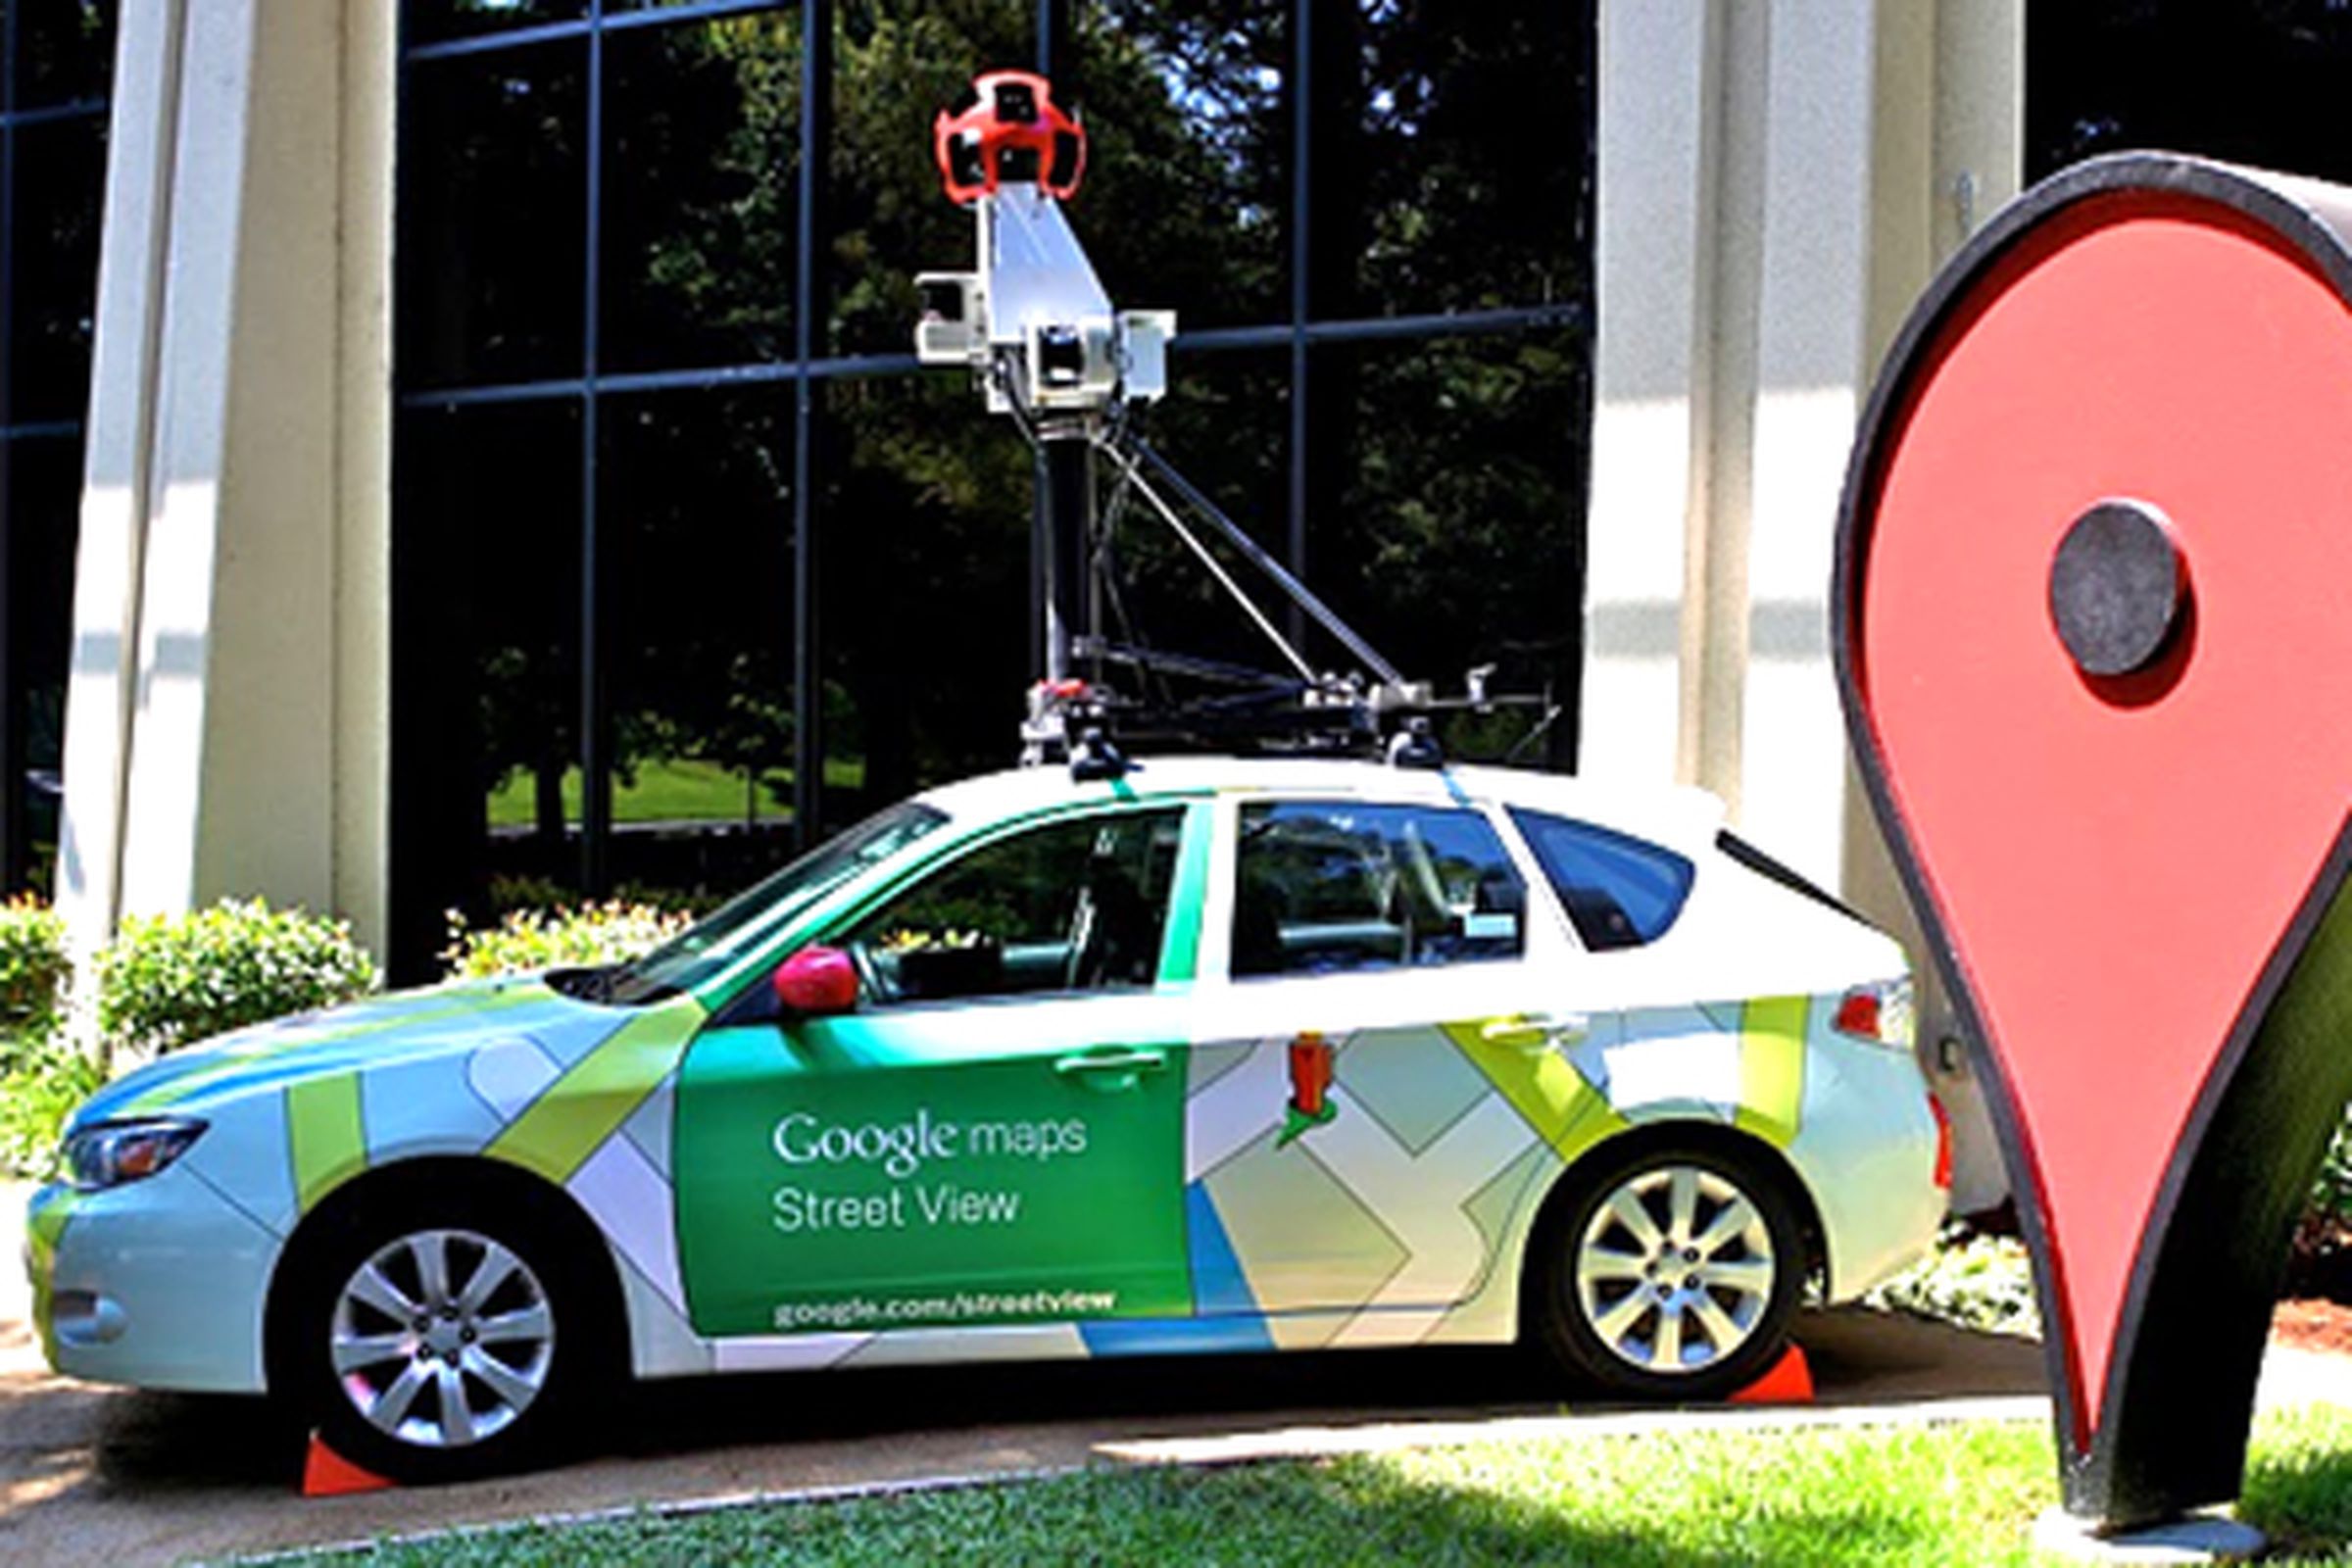 Google Street View car promo image